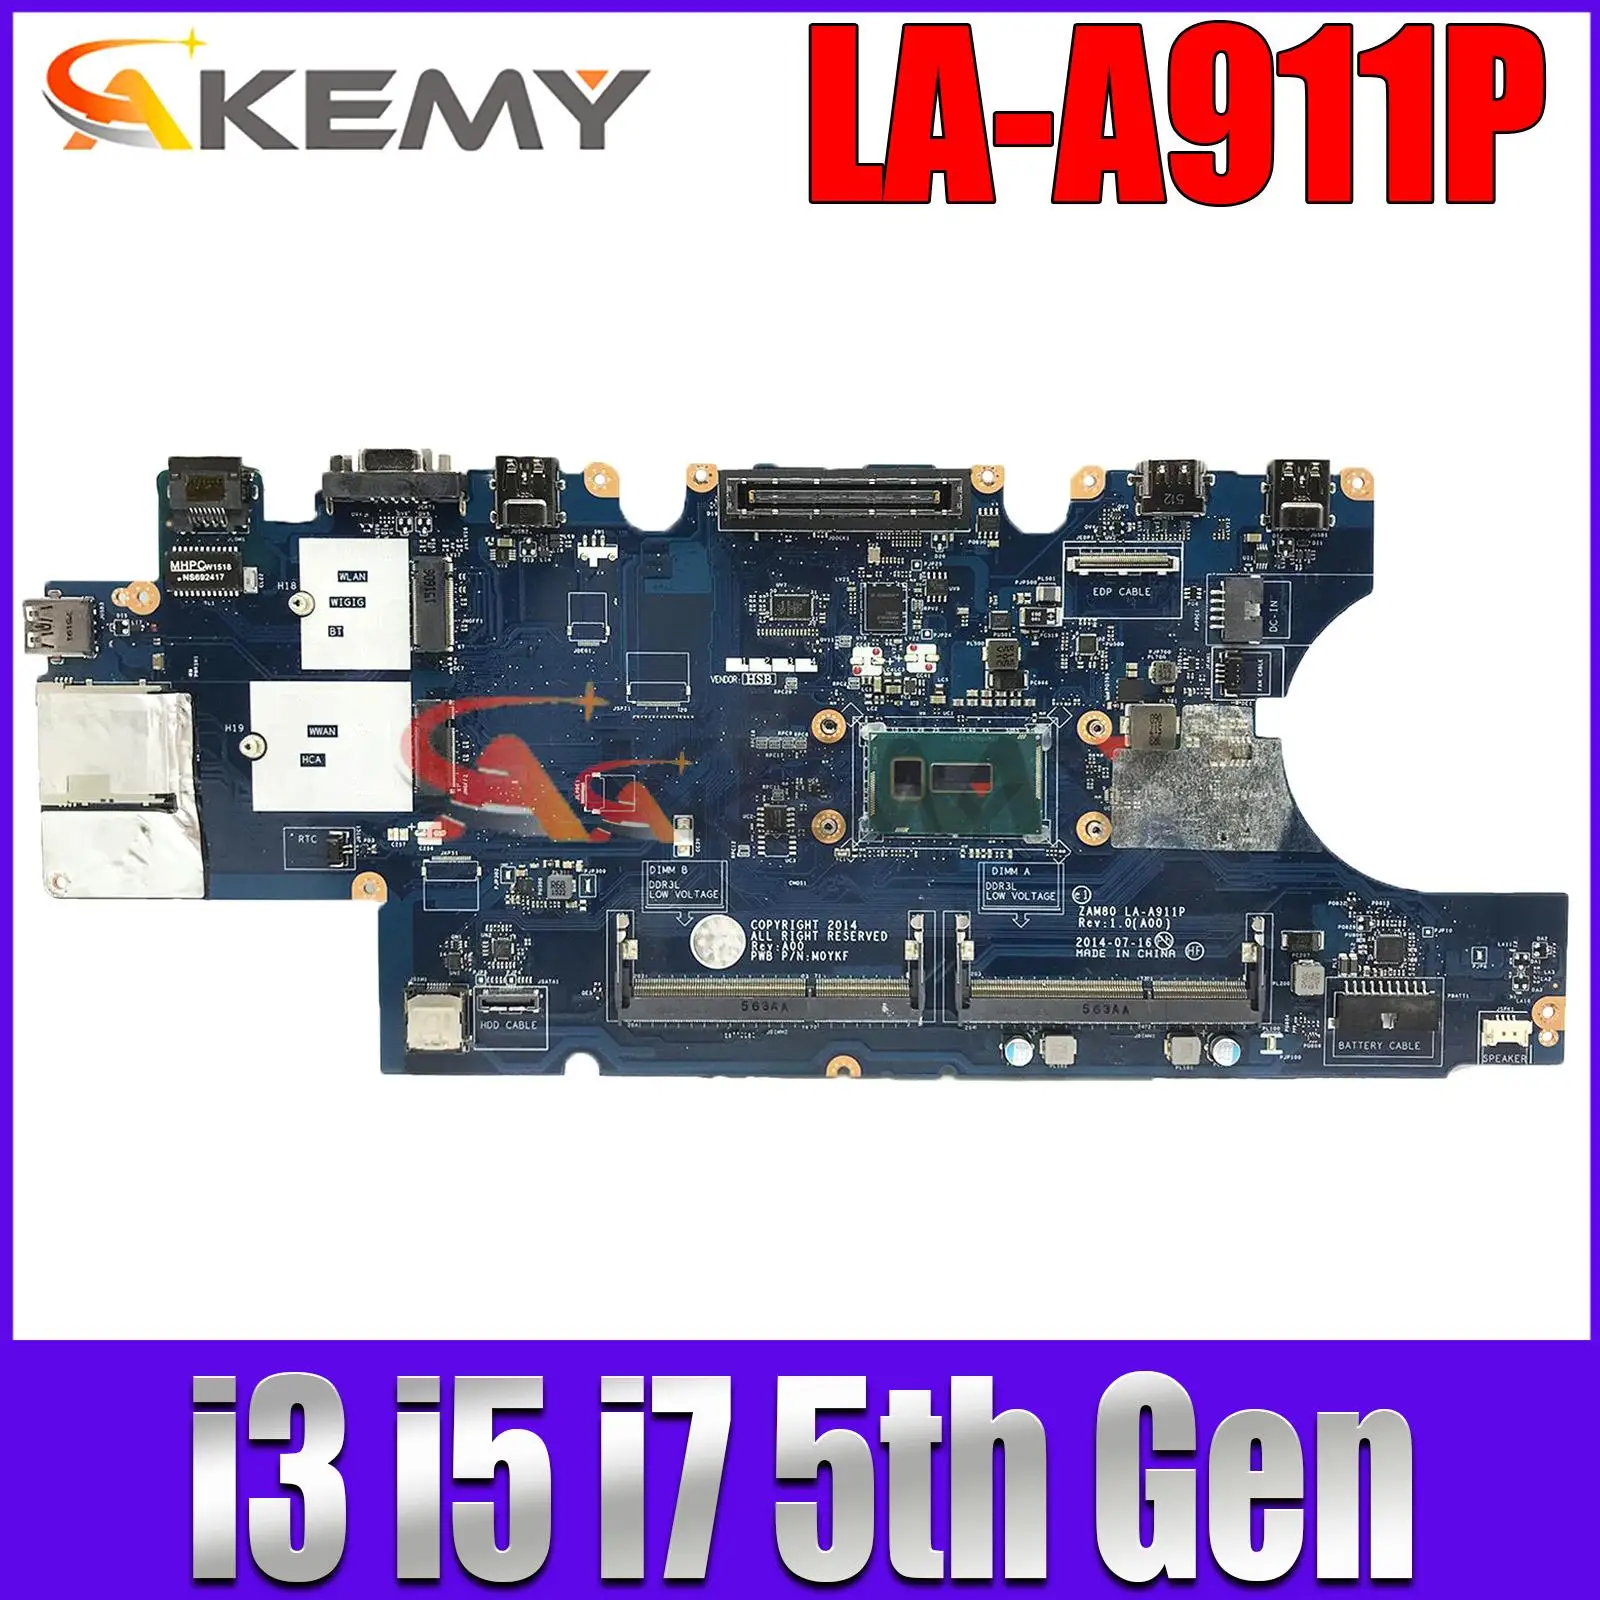 

LA-A911P For dell Latitude 15 5550 E5550 Notebook Motherboard CN-0XGMKX 0V82HM Mainboard with 3755U i3 i5 i7 5th Gen CPU